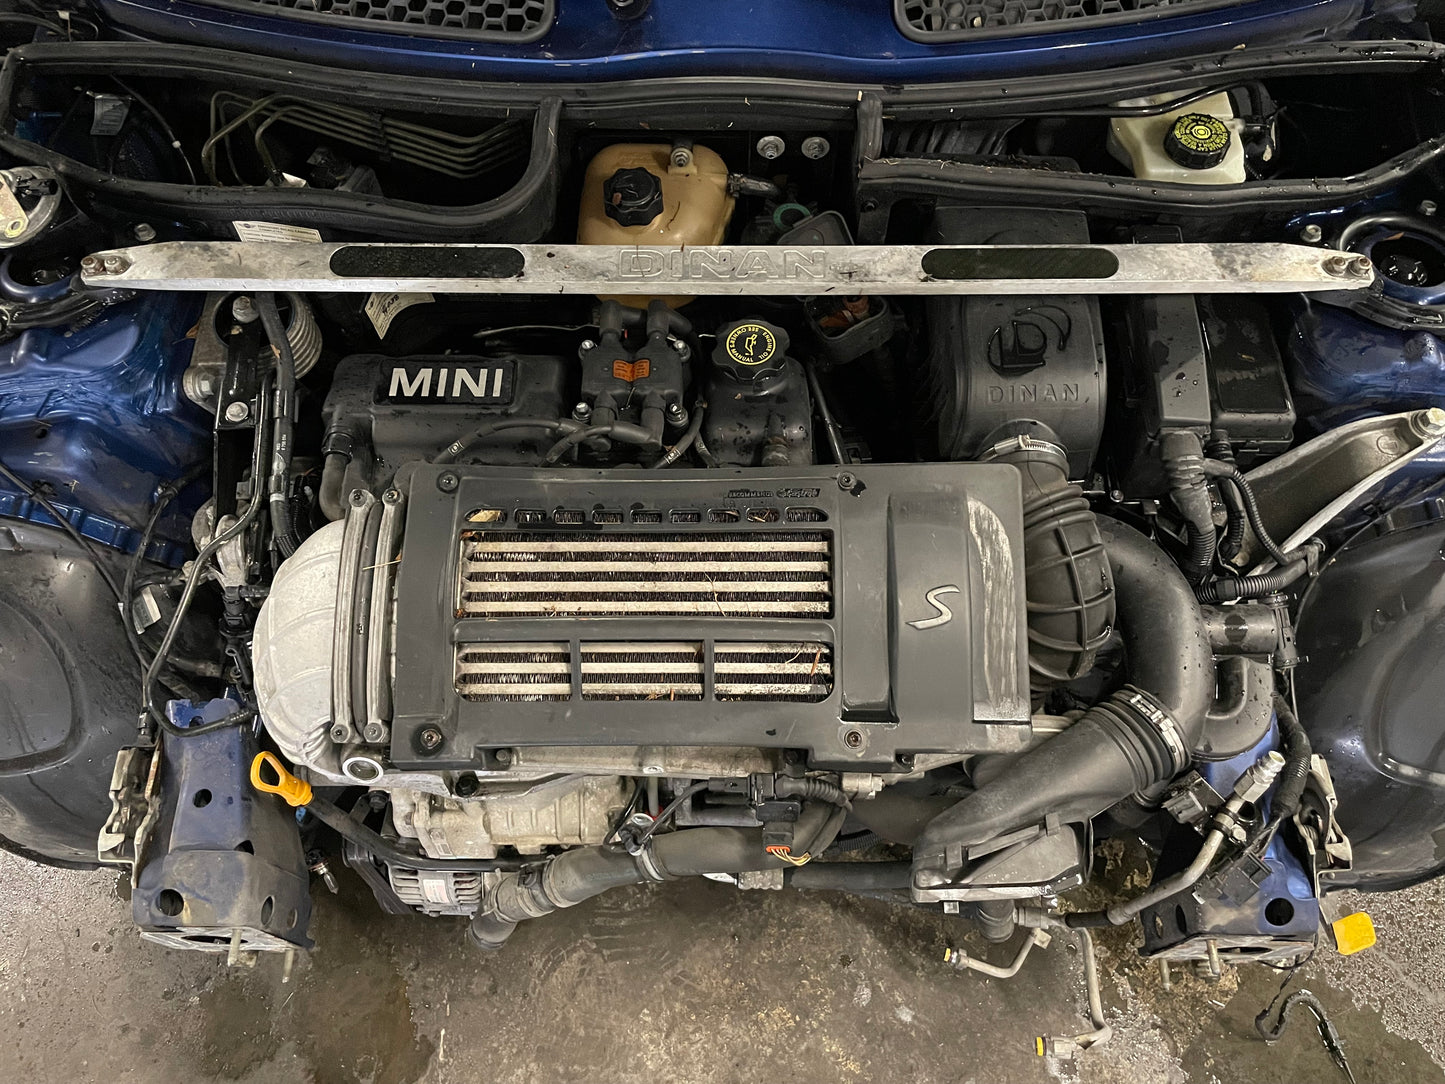 2003 MINI Cooper S, New Parts Car (January 2023) Stk #354